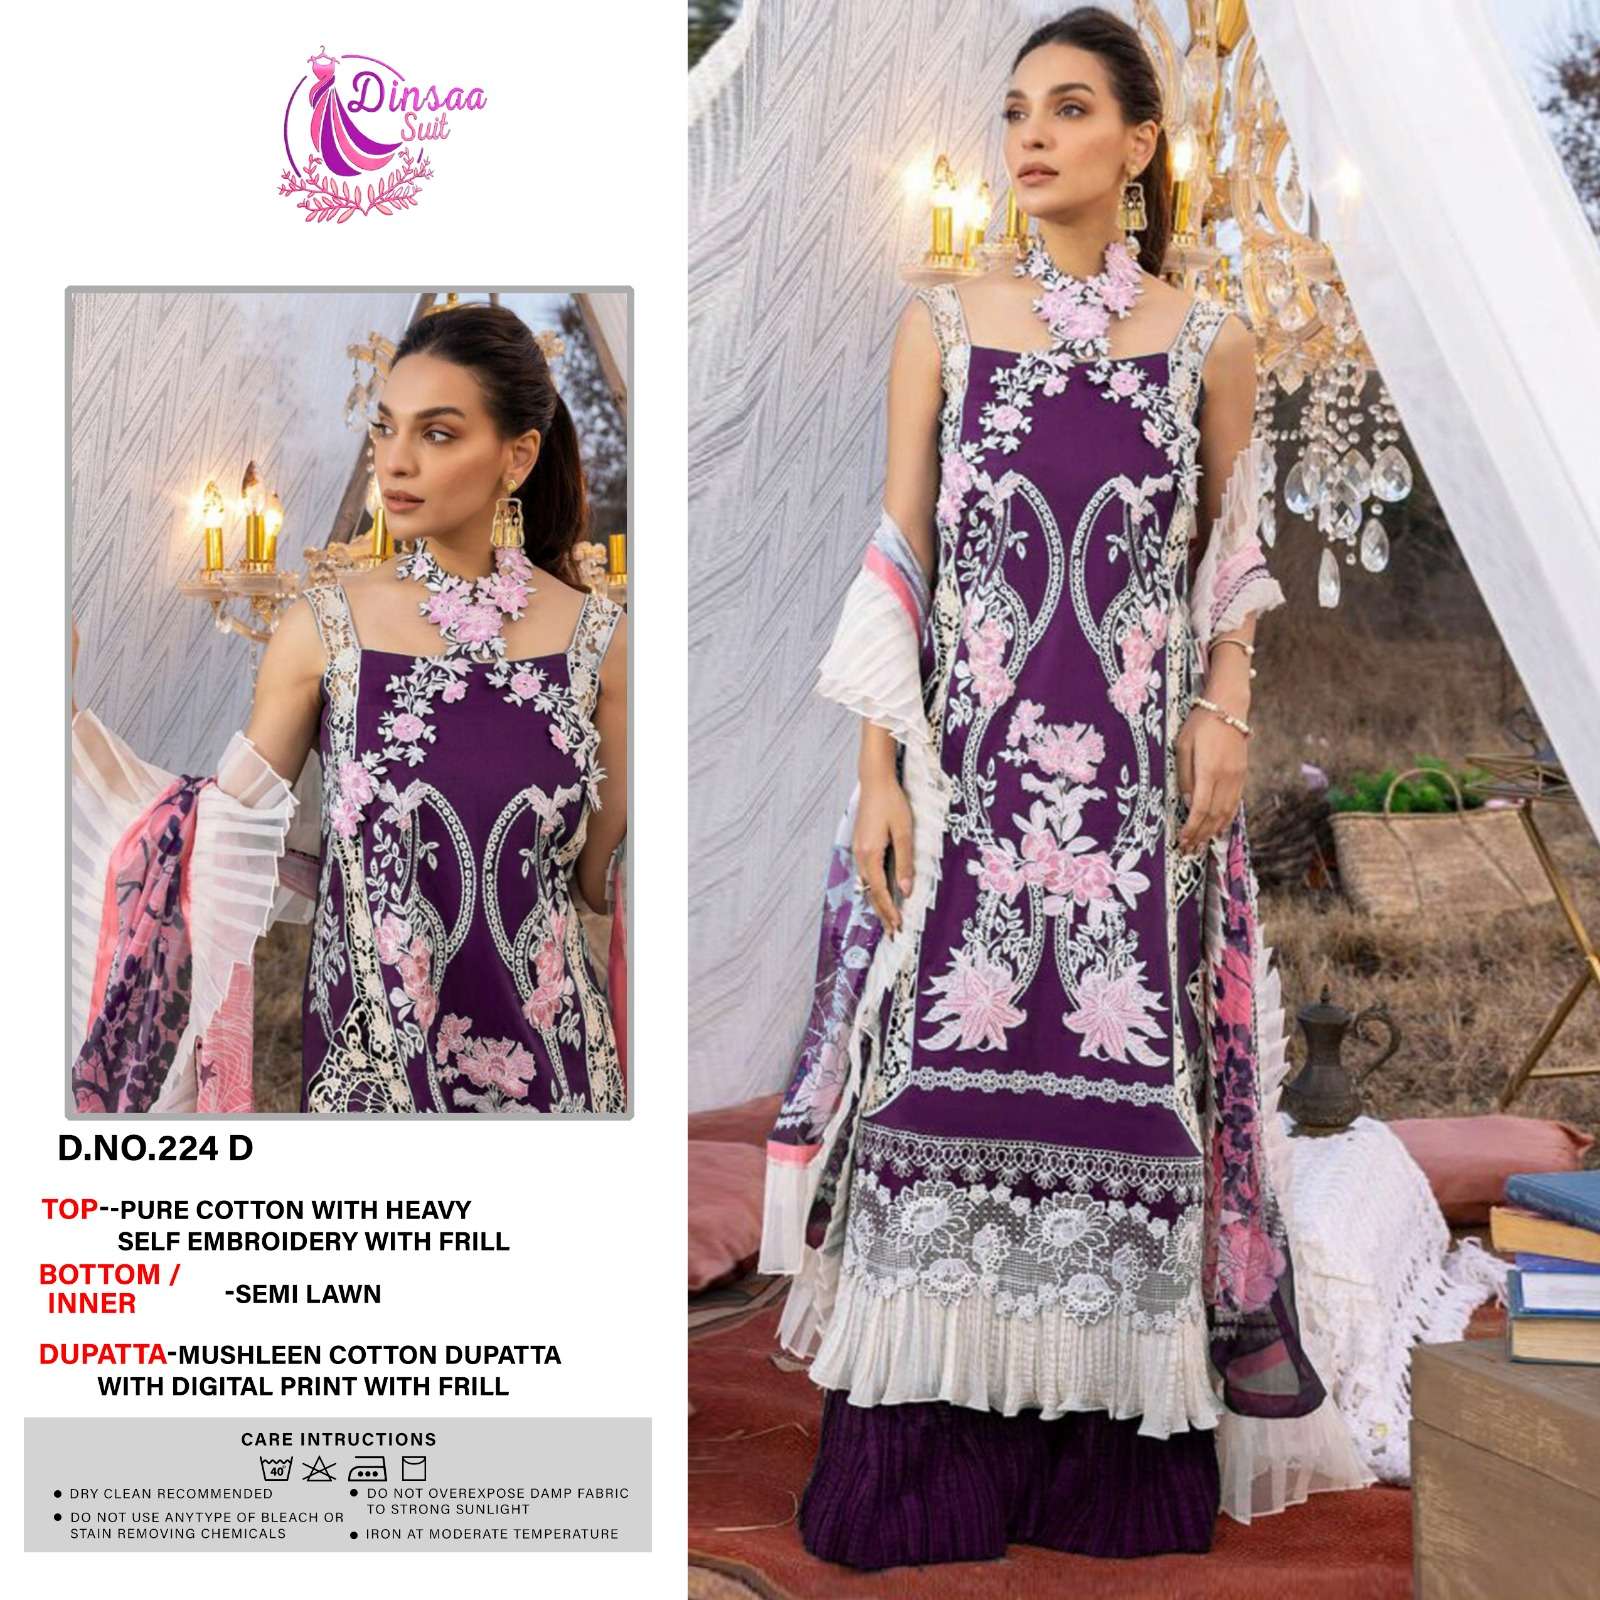 dinsaa suits 224 series stylish designer pakistani salwar suits online wholesaler surat